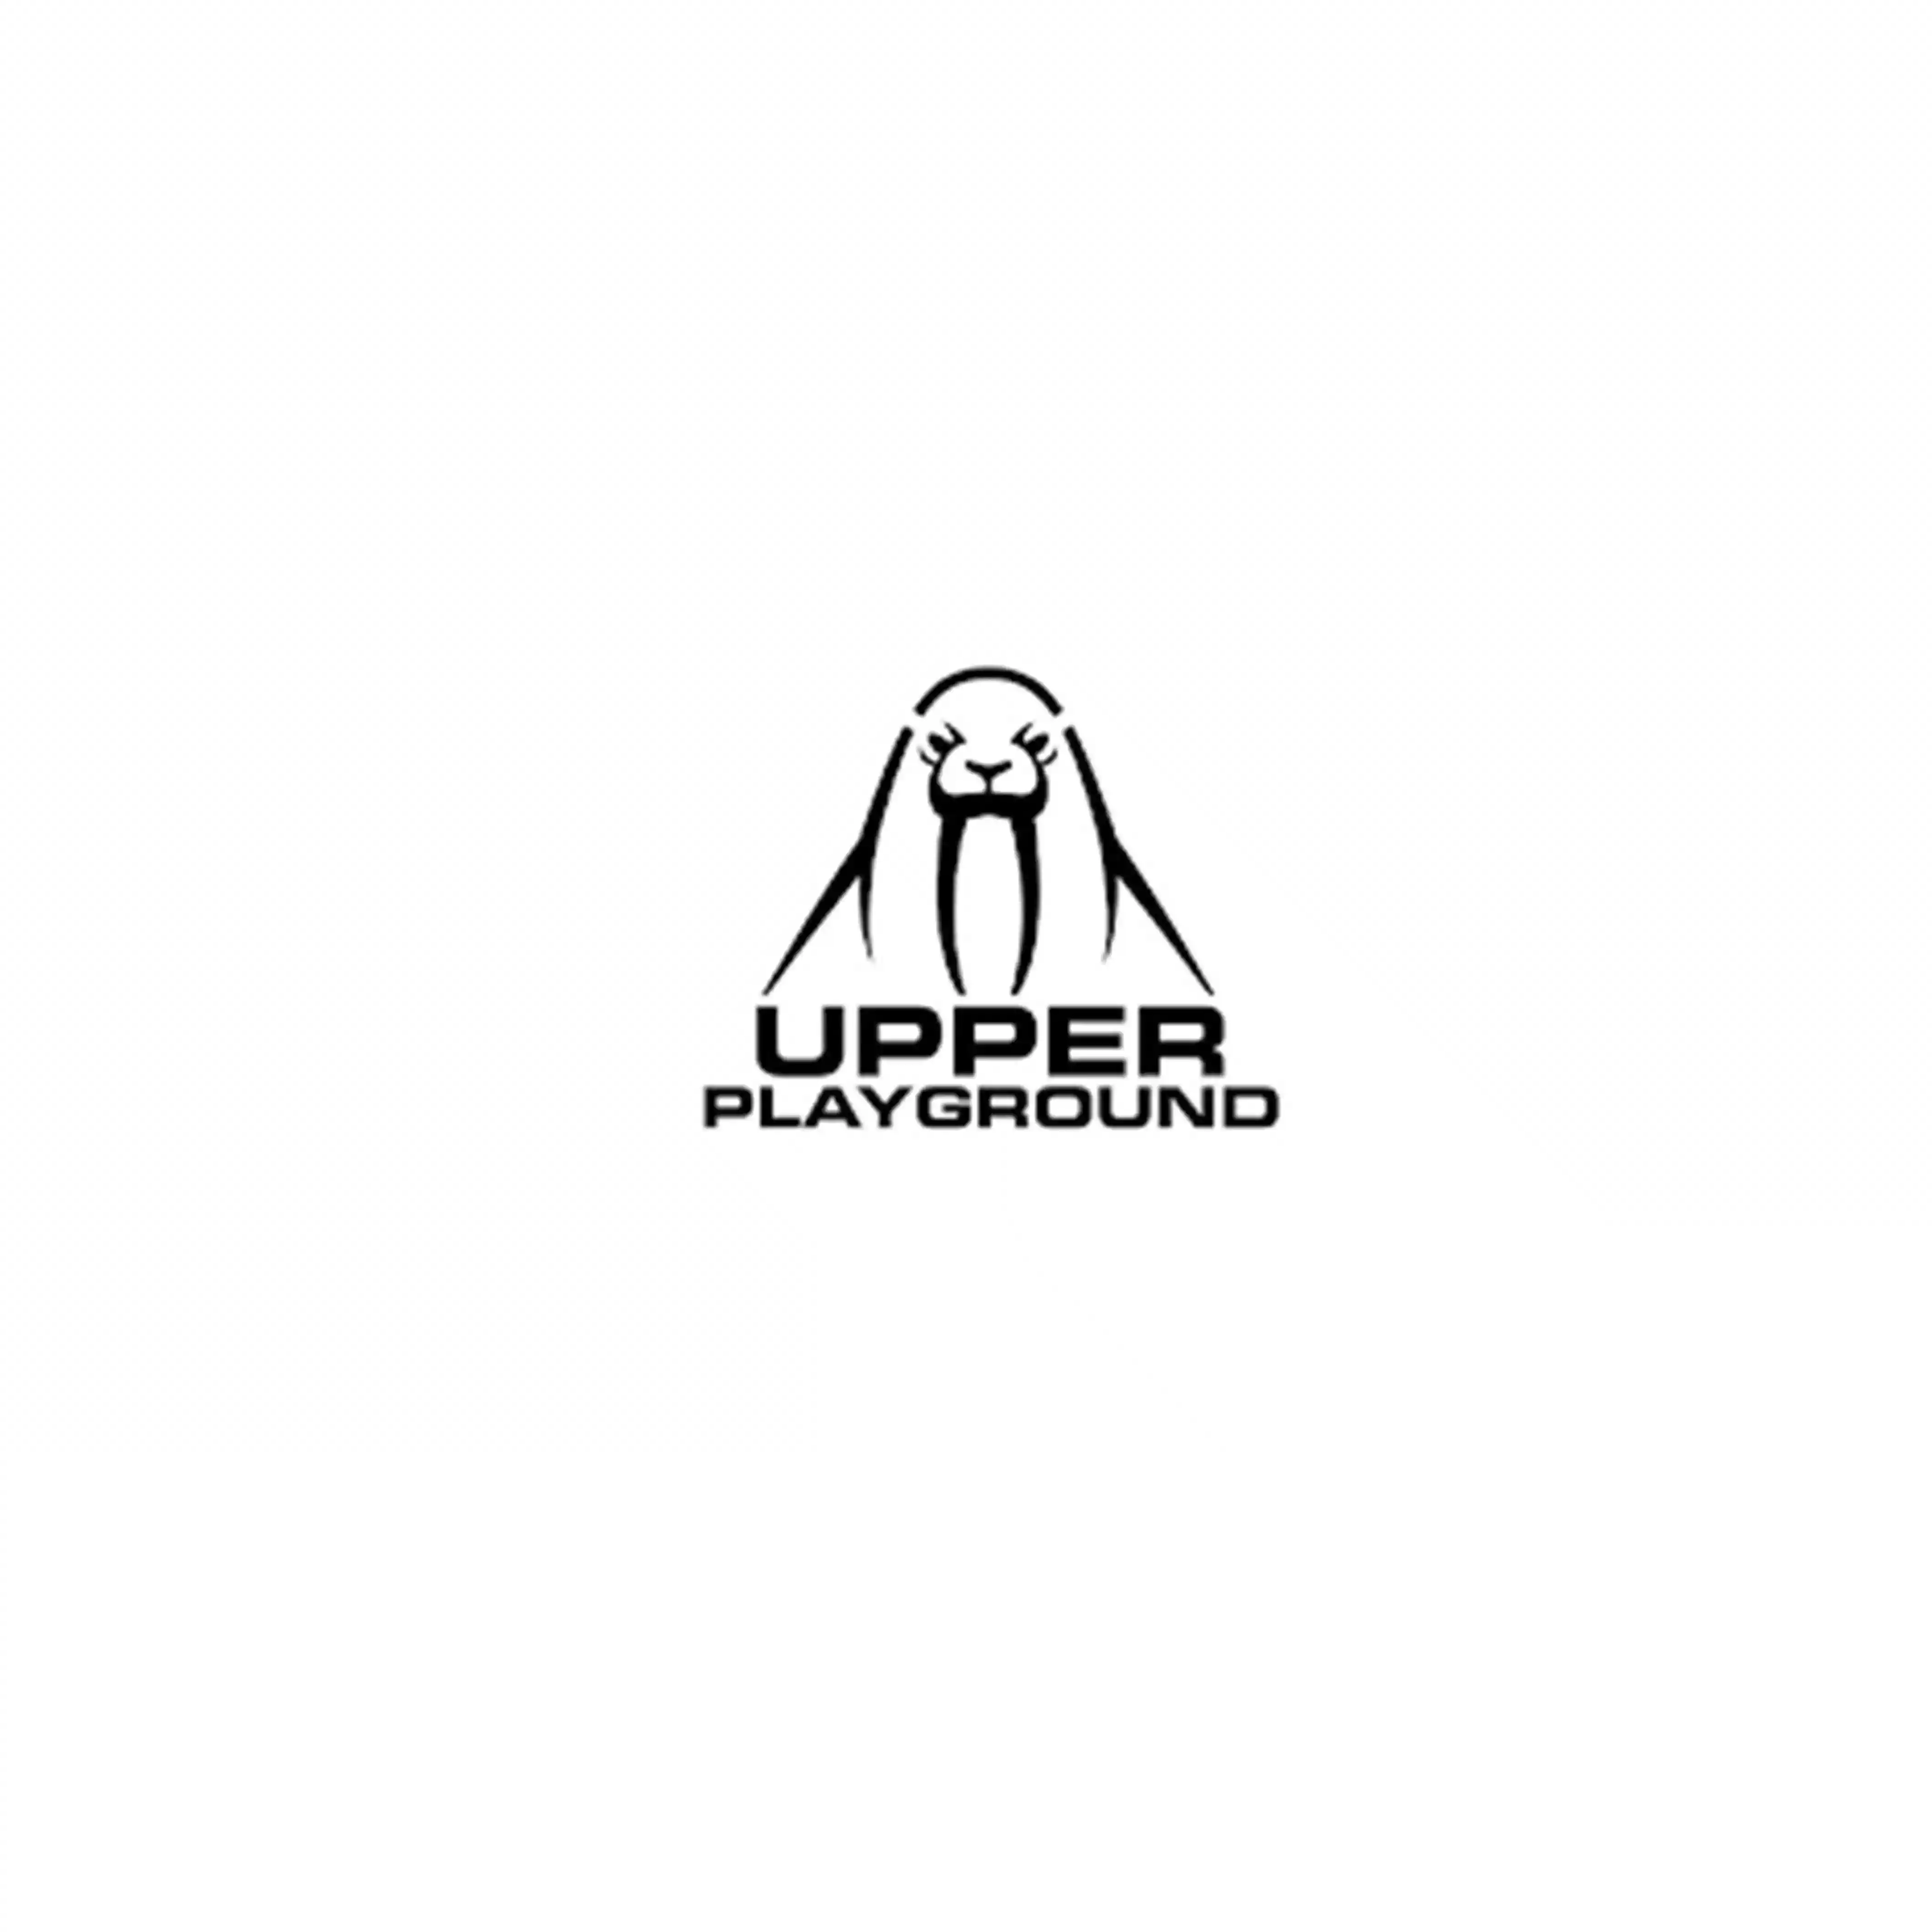 Shop Upperplayground coupon codes logo